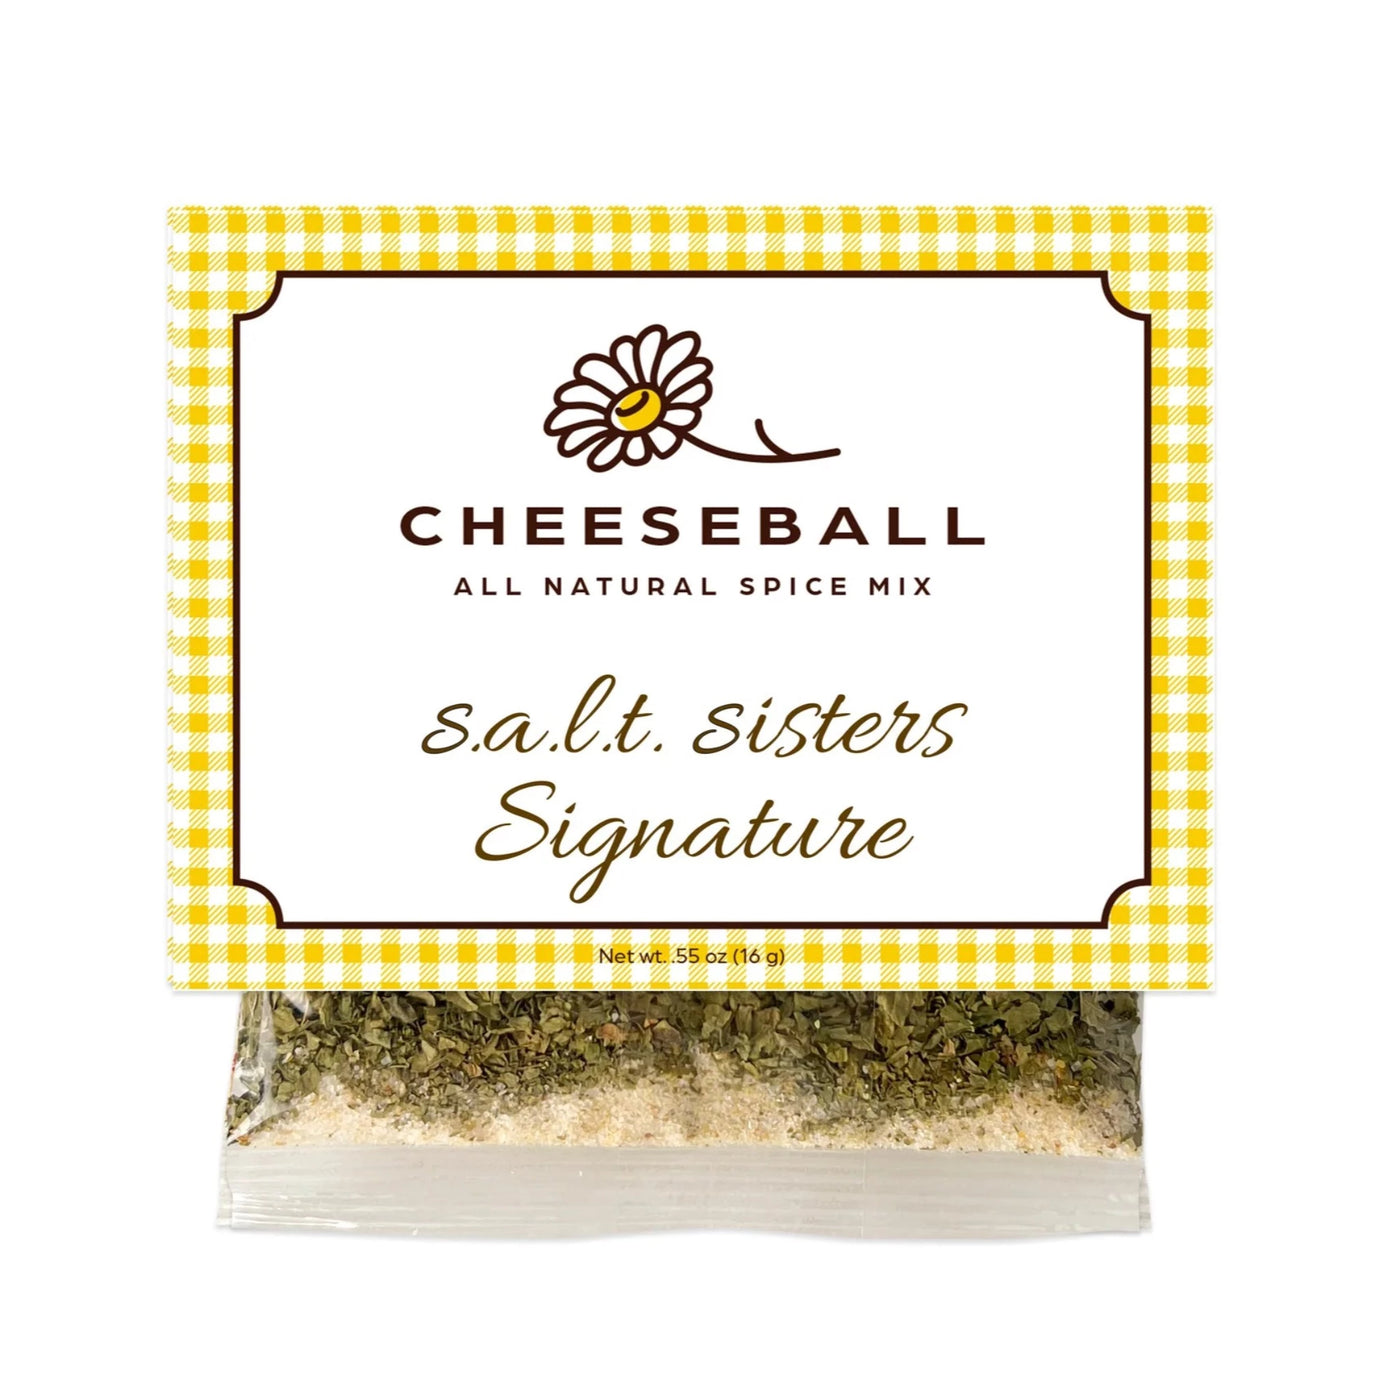 Salt Sisters Signature Cheeseball Spice Mix